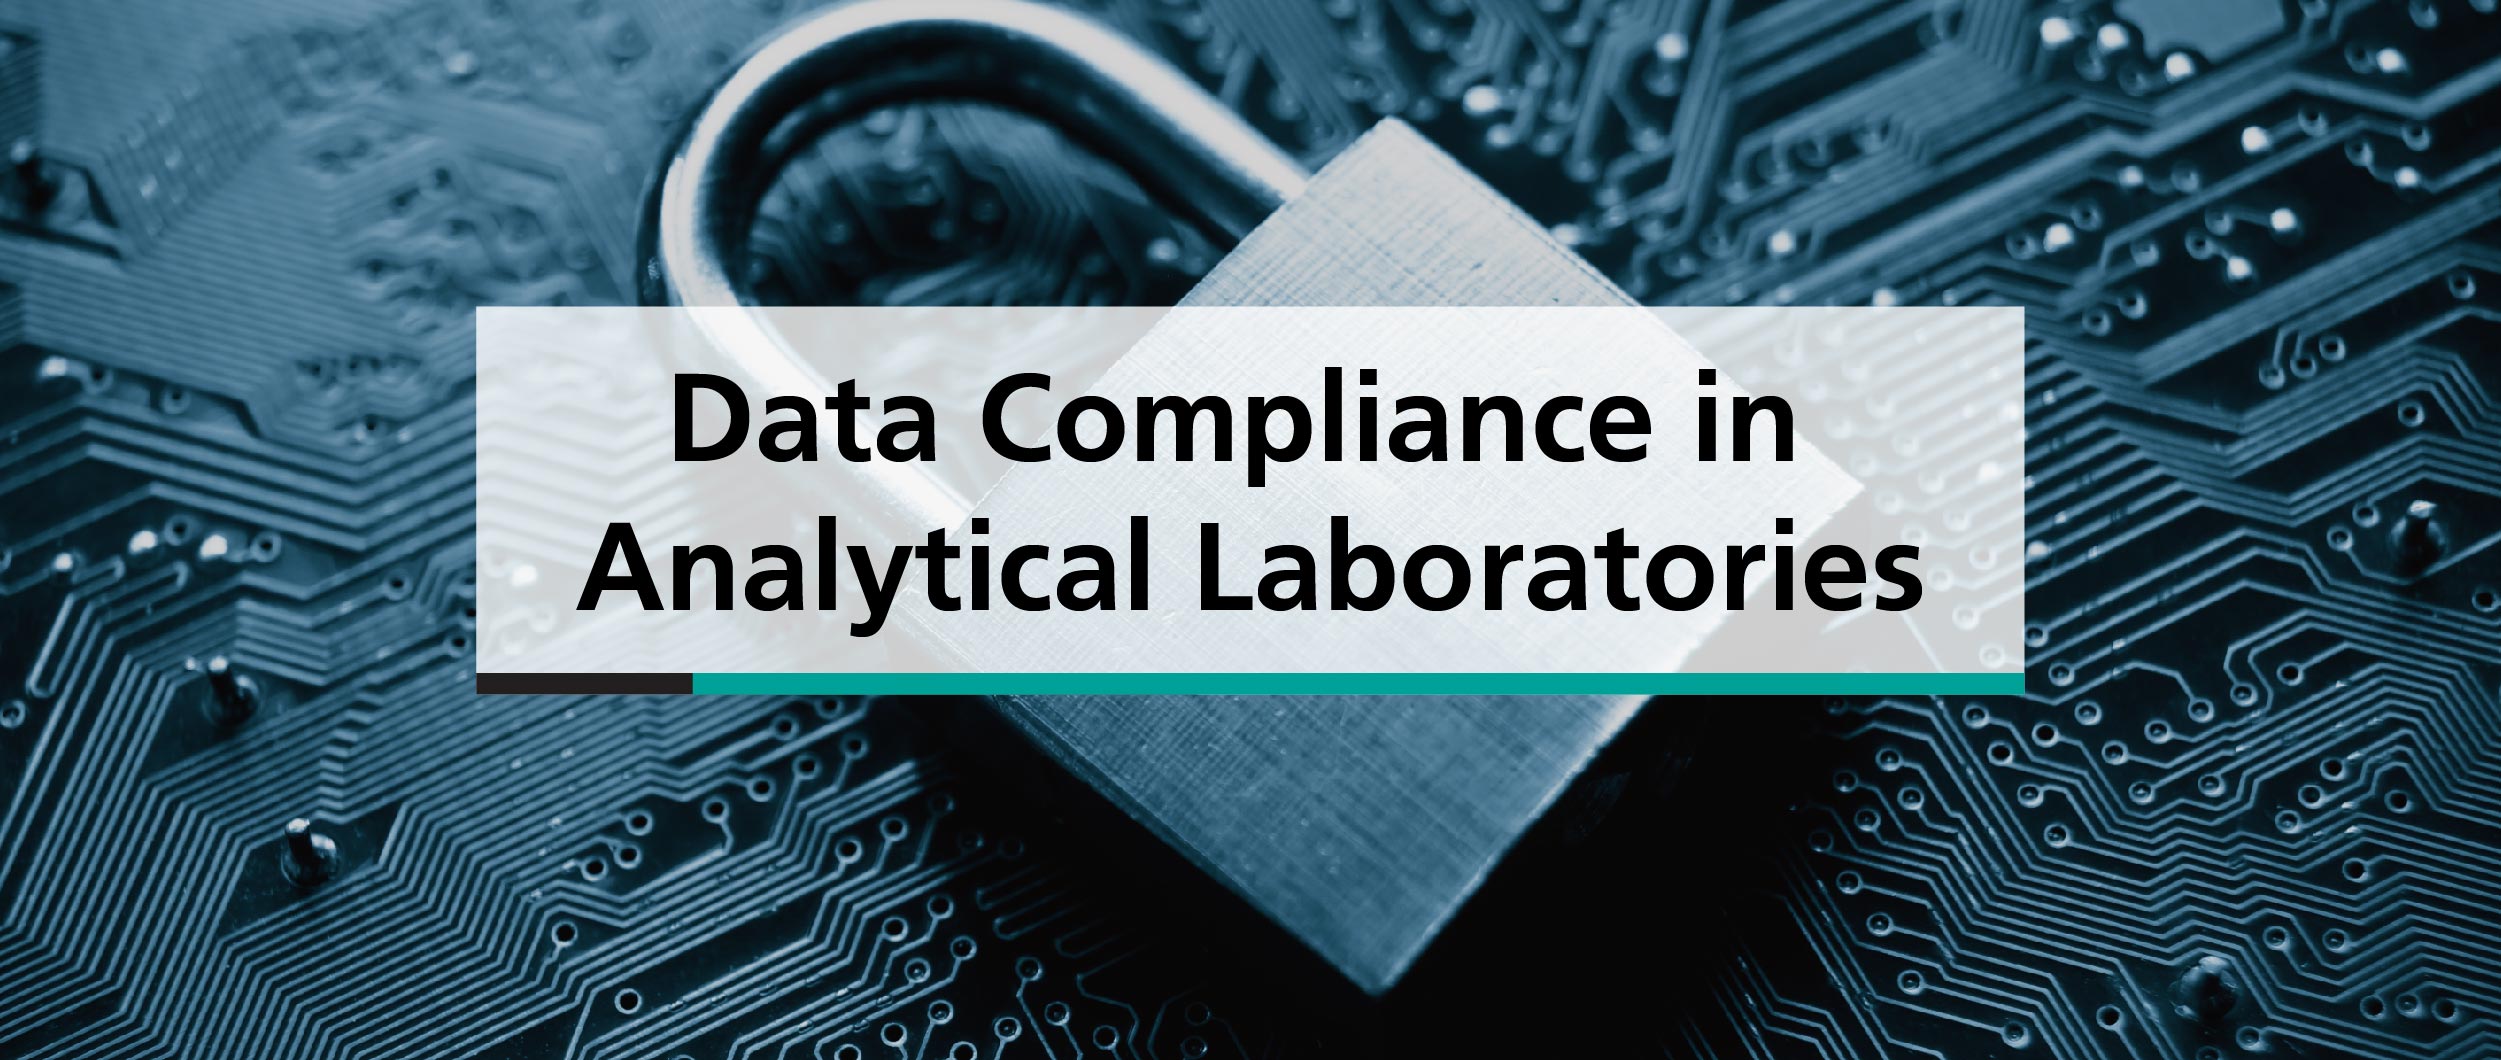 Data Compliance in Analytical Laboratories